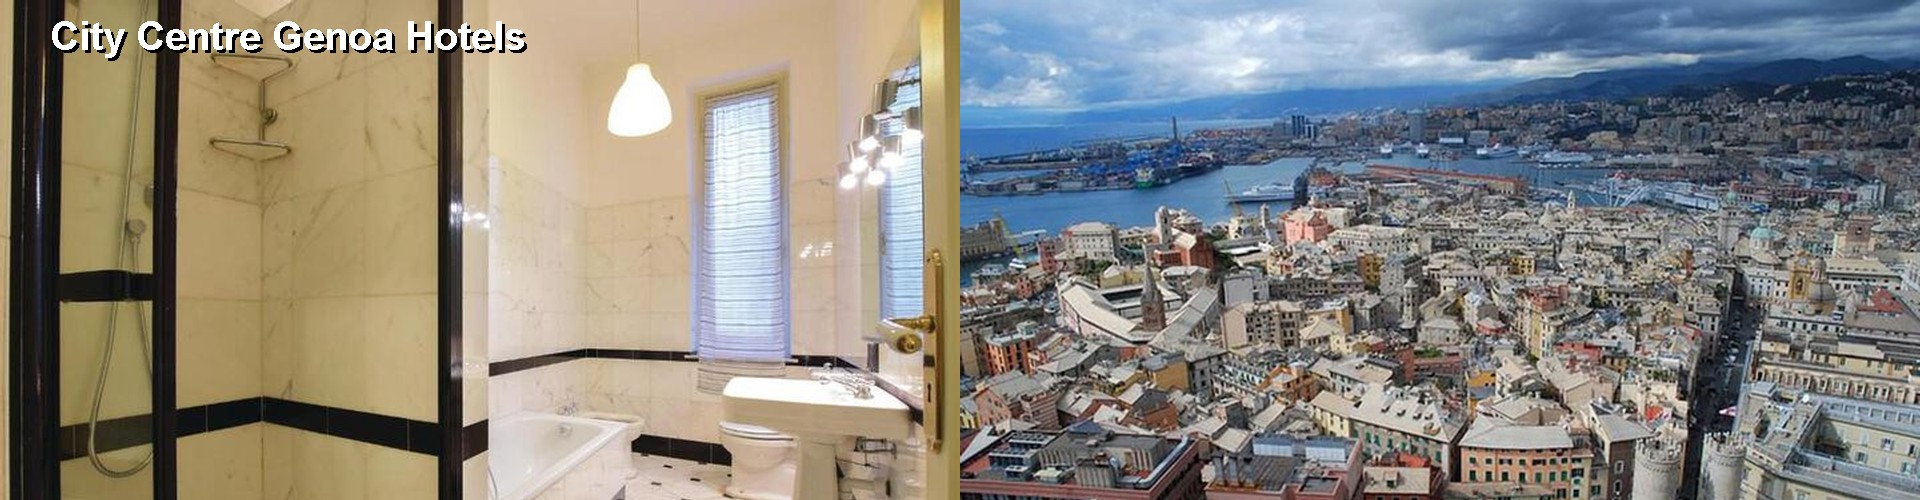 5 Best Hotels near City Centre Genoa